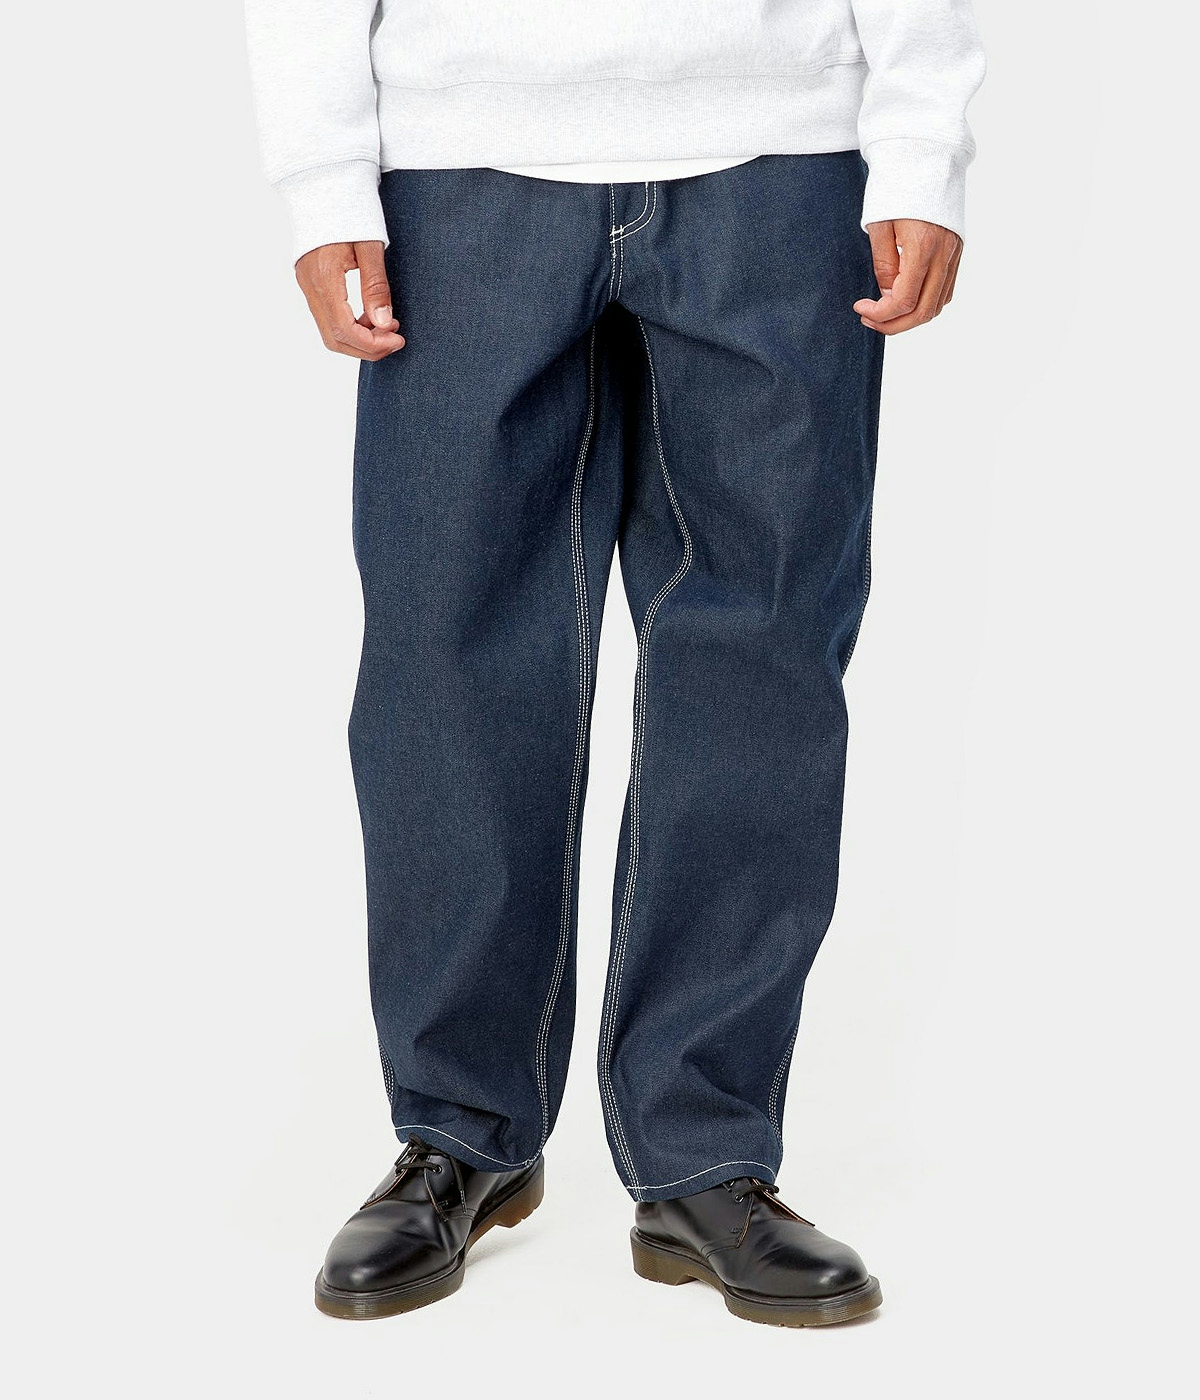 Carhartt Pants Simple Blue rigid